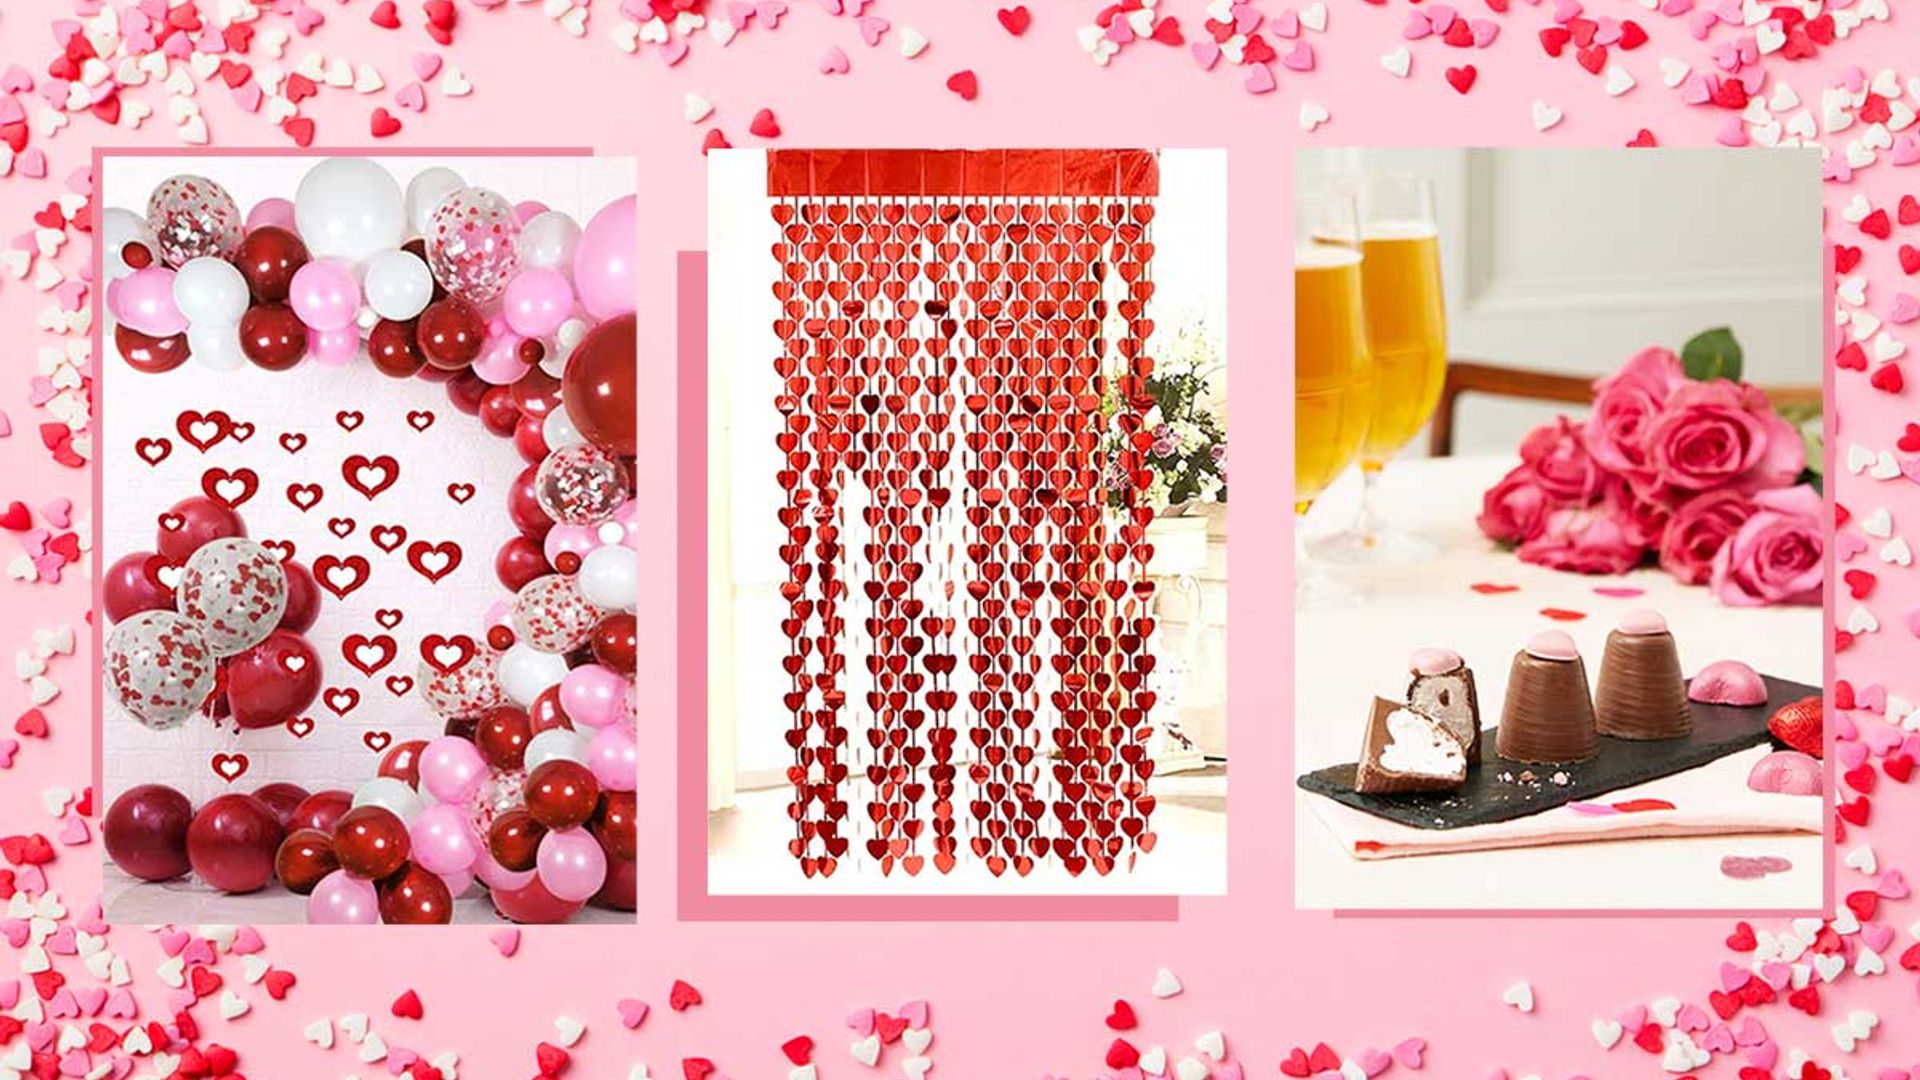 Valentine’s Day decoration ideas for 2023: Balloon arches, rose petals, confetti & more